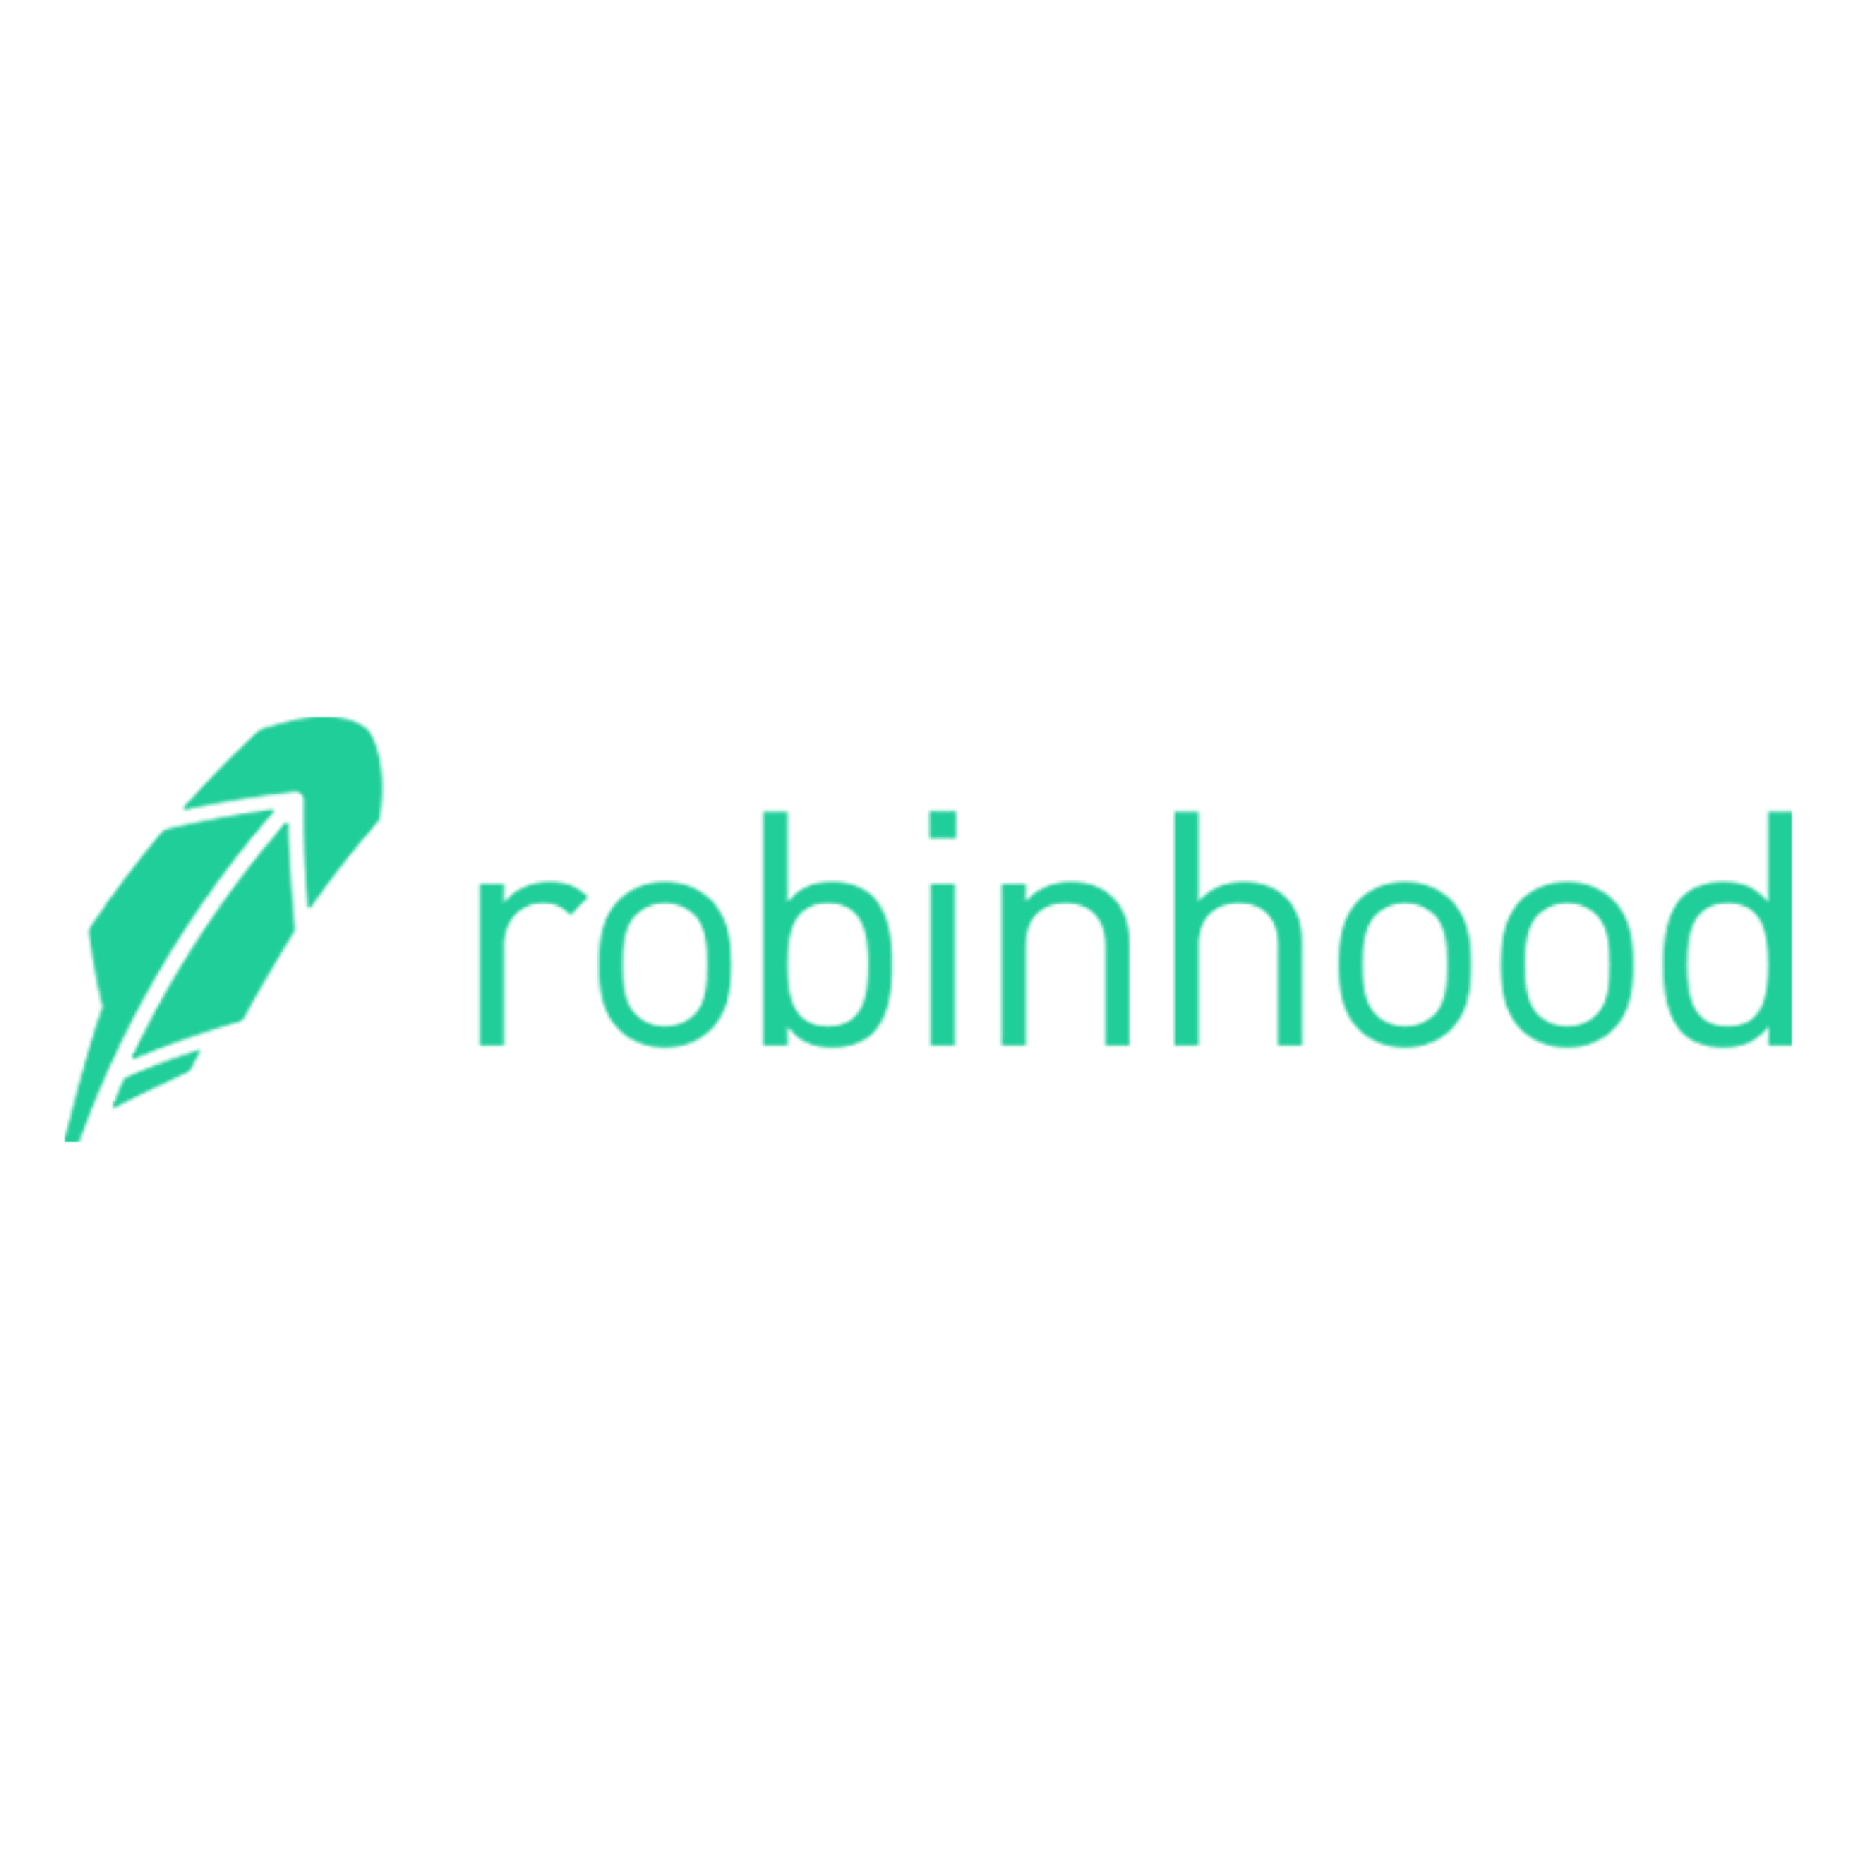 Robinhood Stock